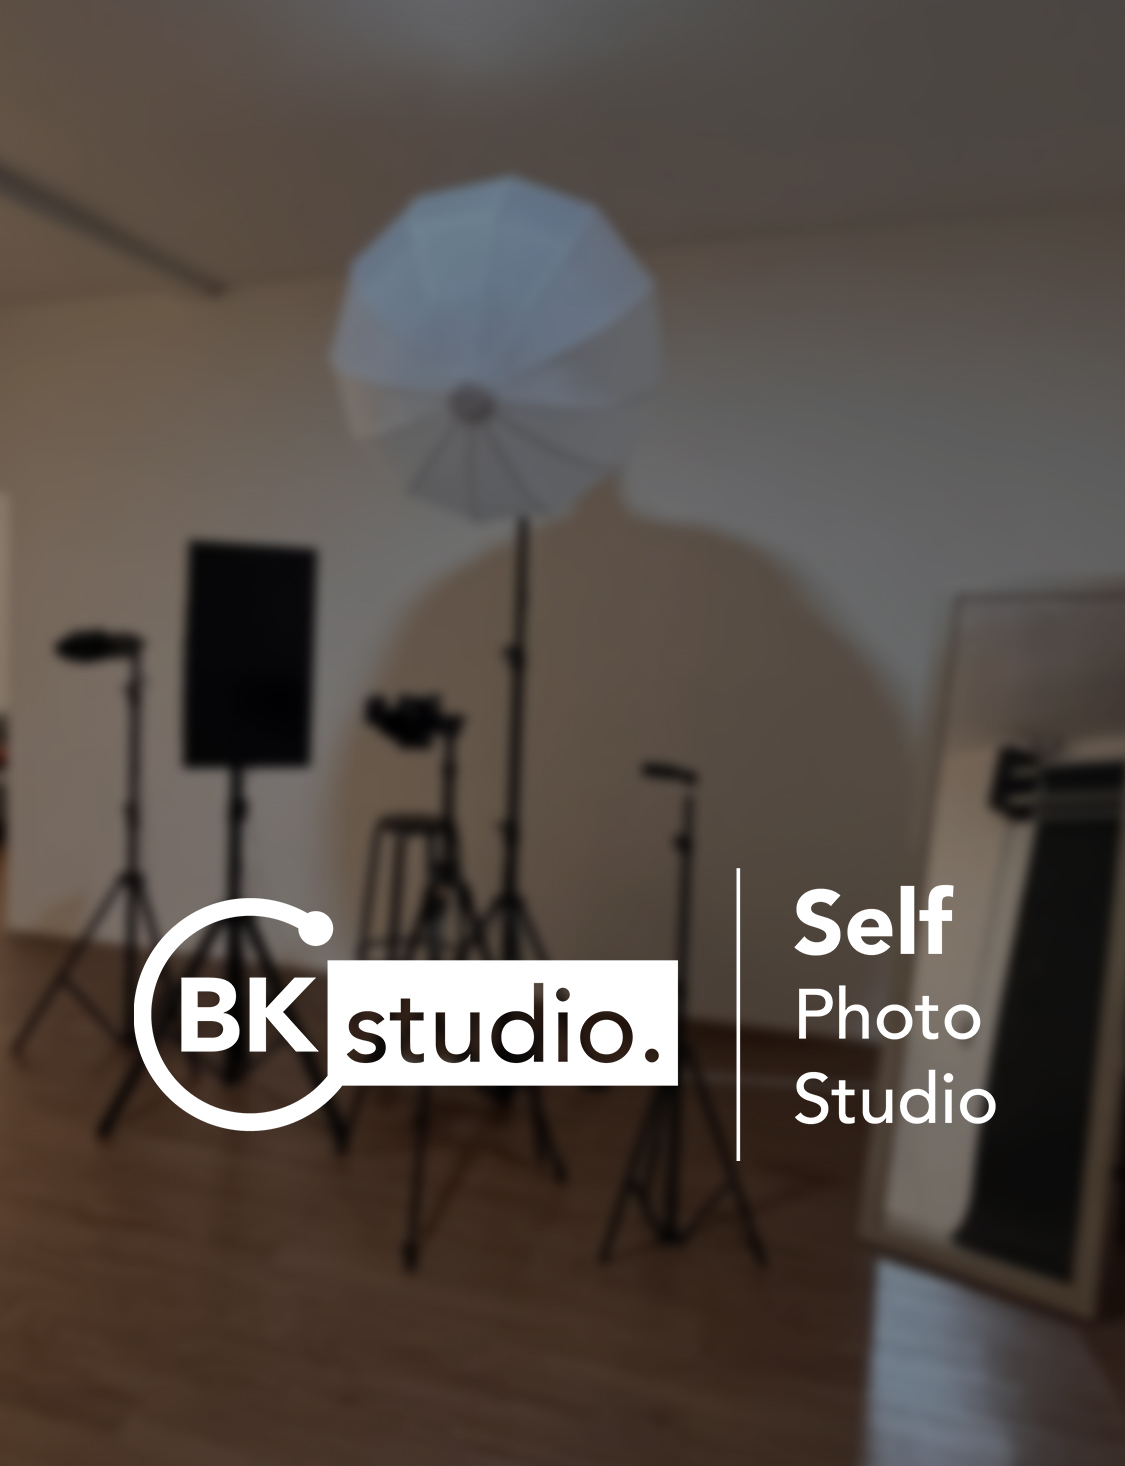 BK Studio - Self Photo Studio